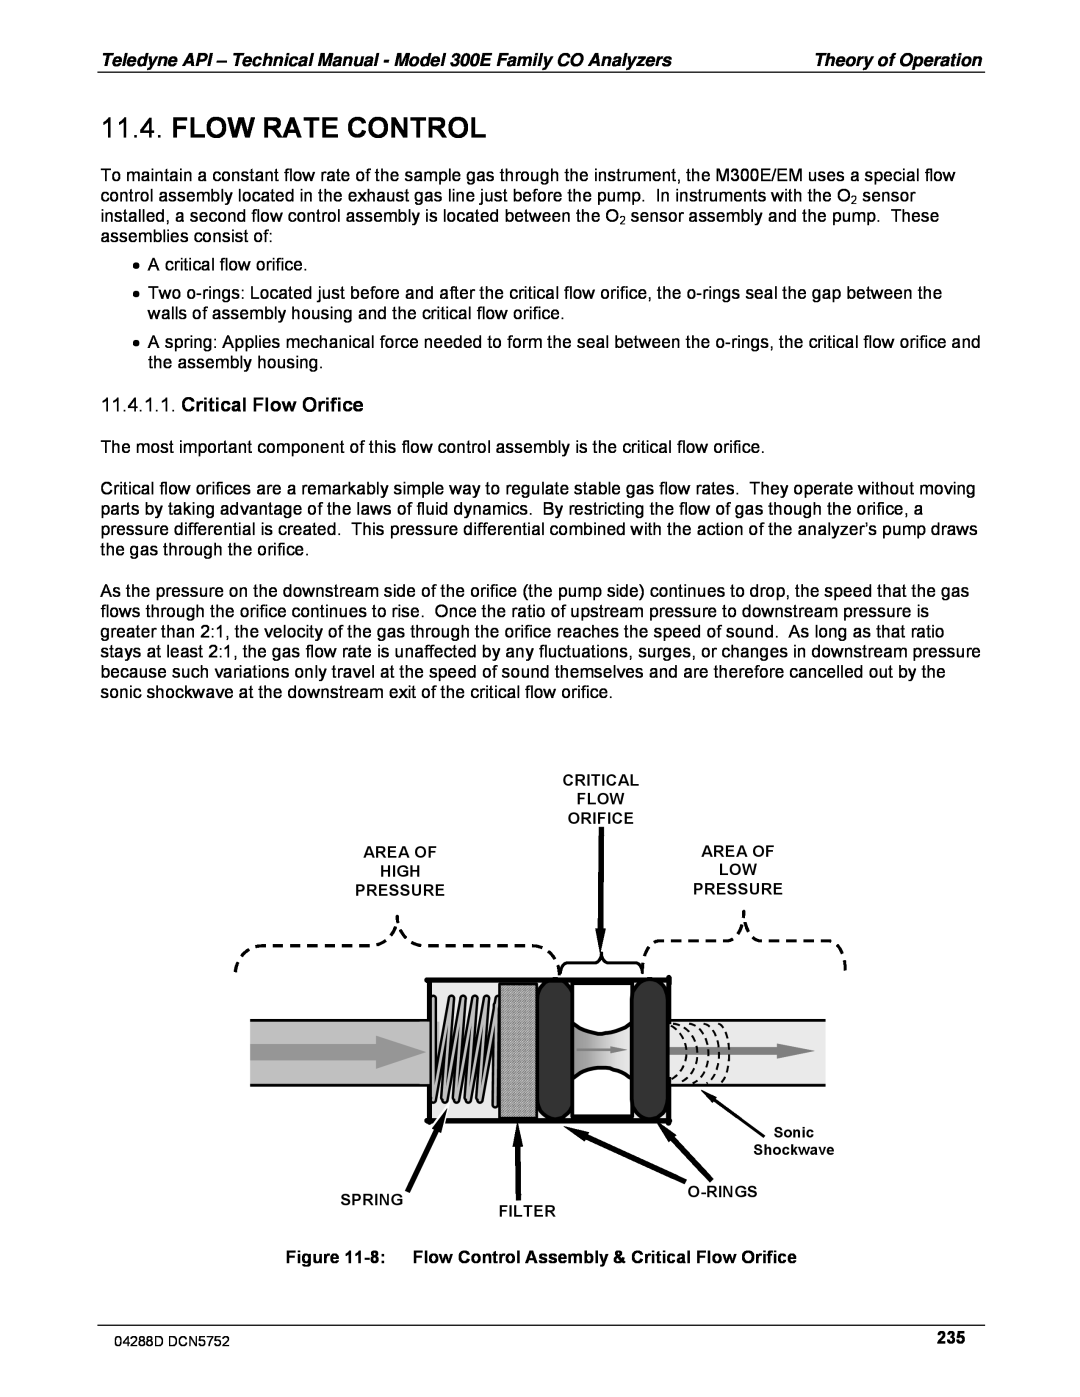 Teledyne M300EM operation manual Flow Rate Control, Critical Flow Orifice 